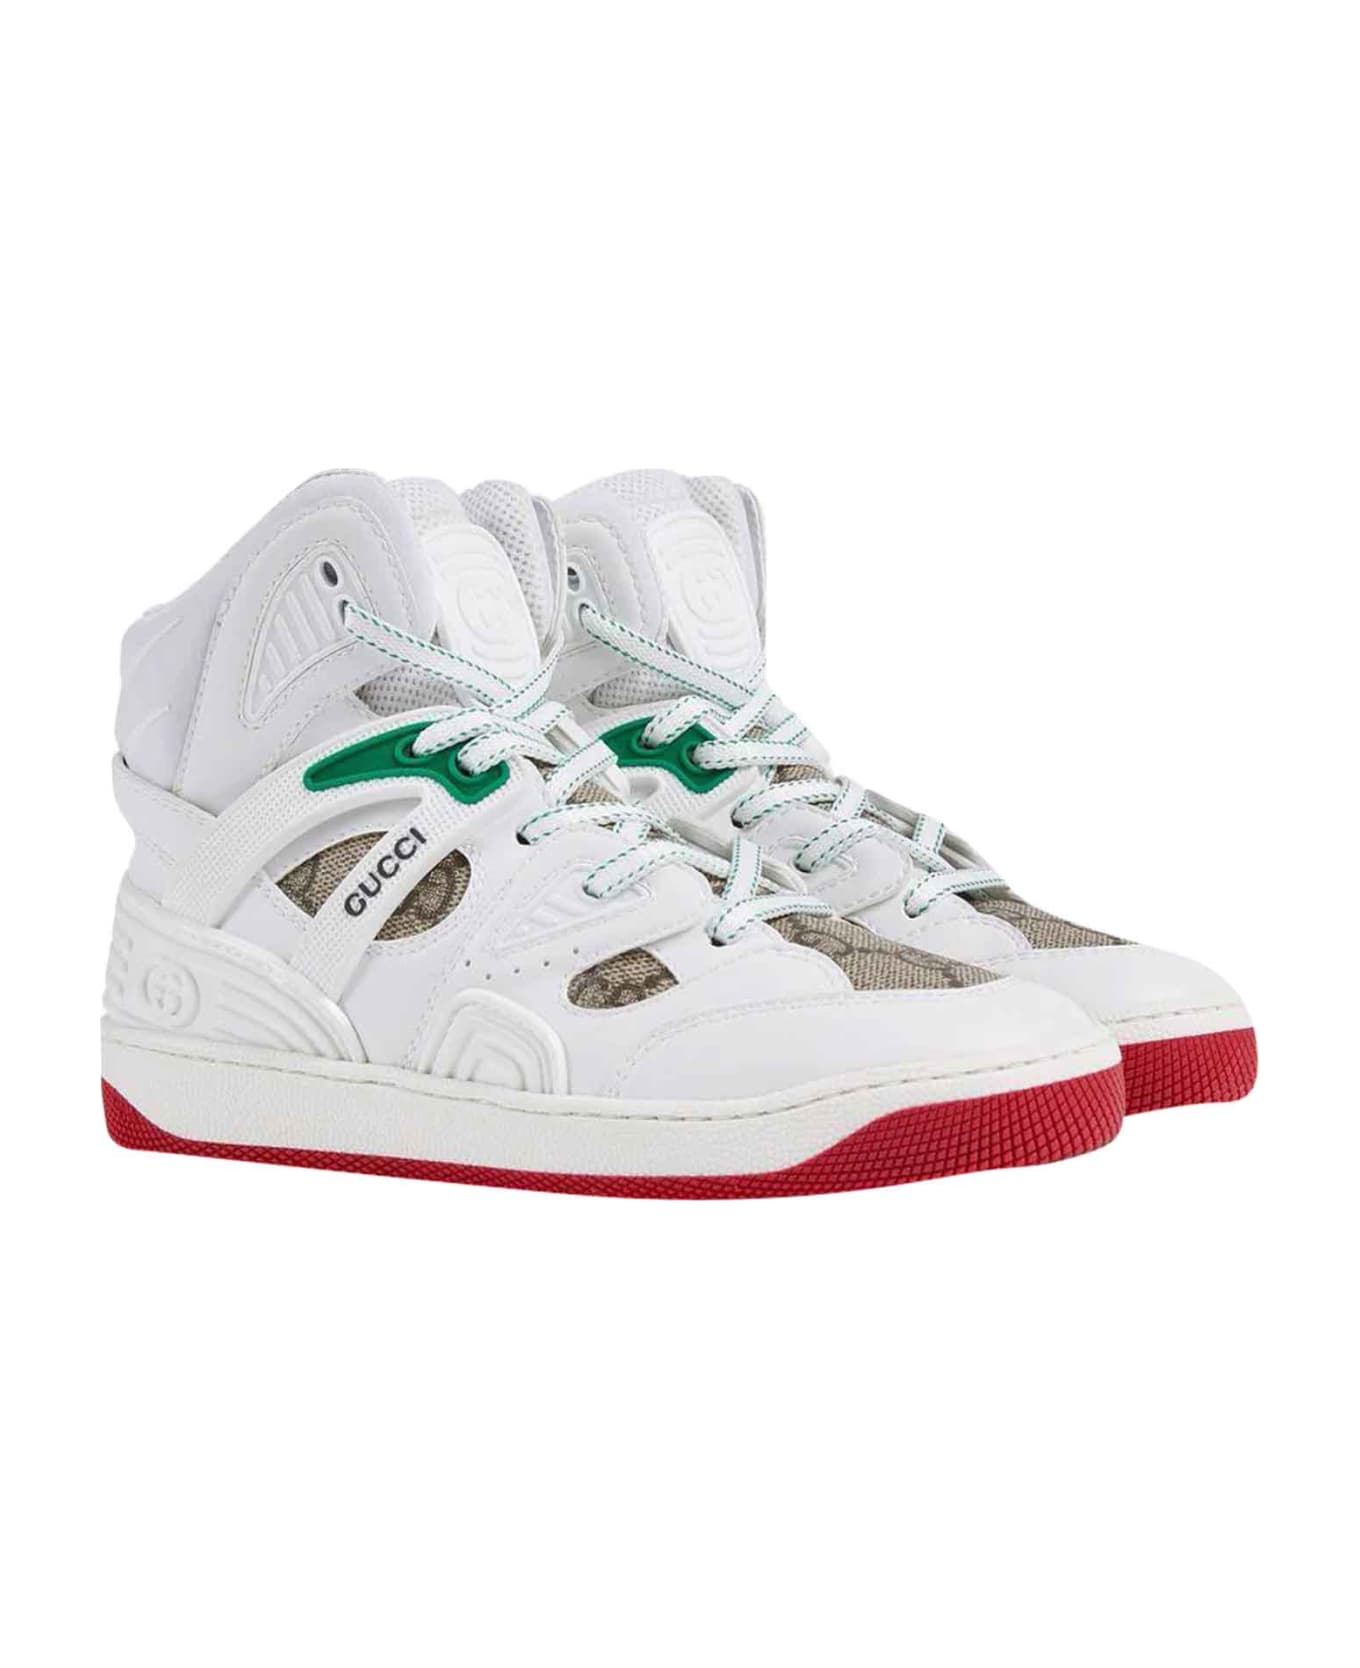 Gucci White Sneakers Unisex - Bianco